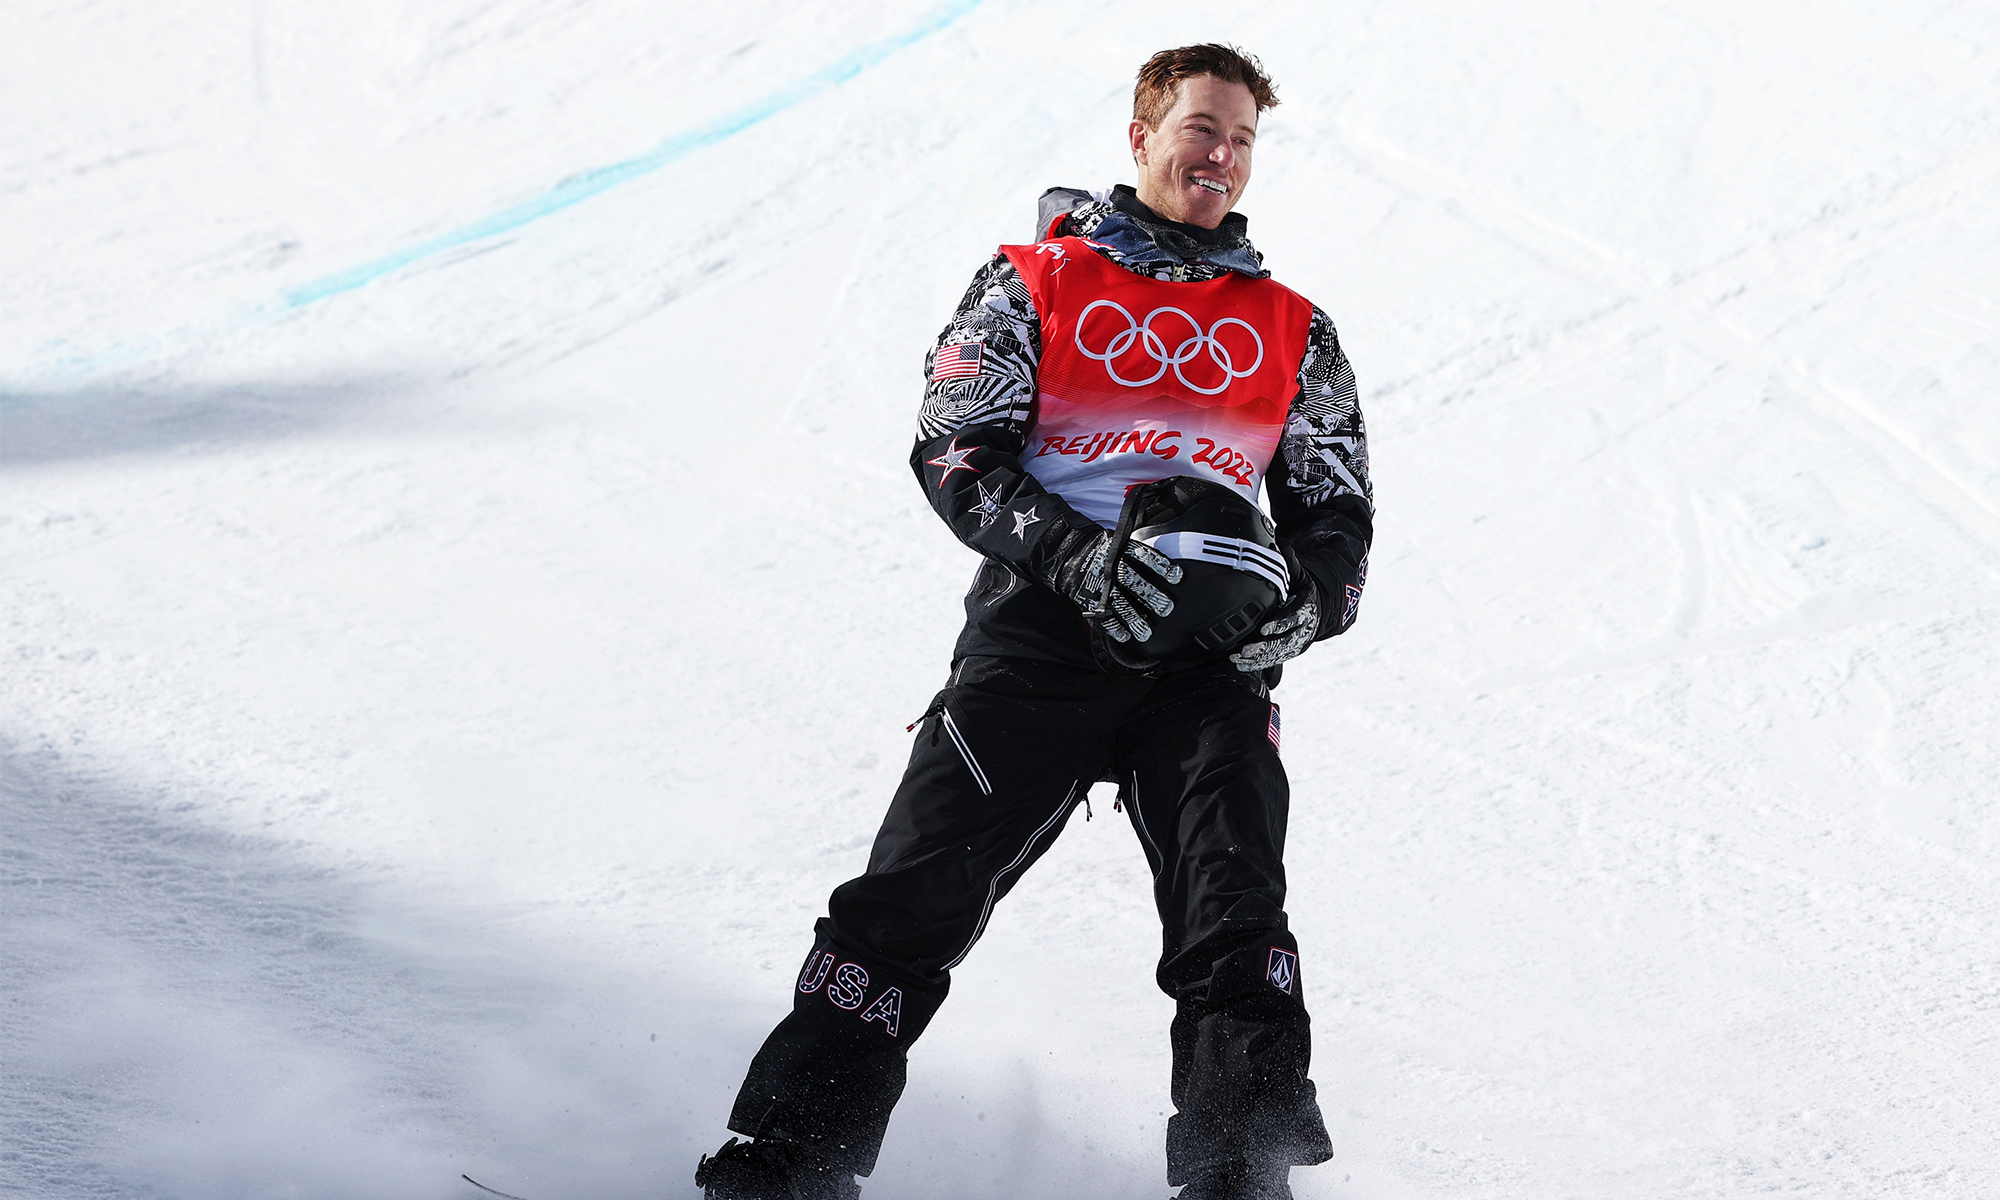 Live From Beijing 2022 Shaun White ends stellar snowboard career after Beijing 2022 mens halfpipe final